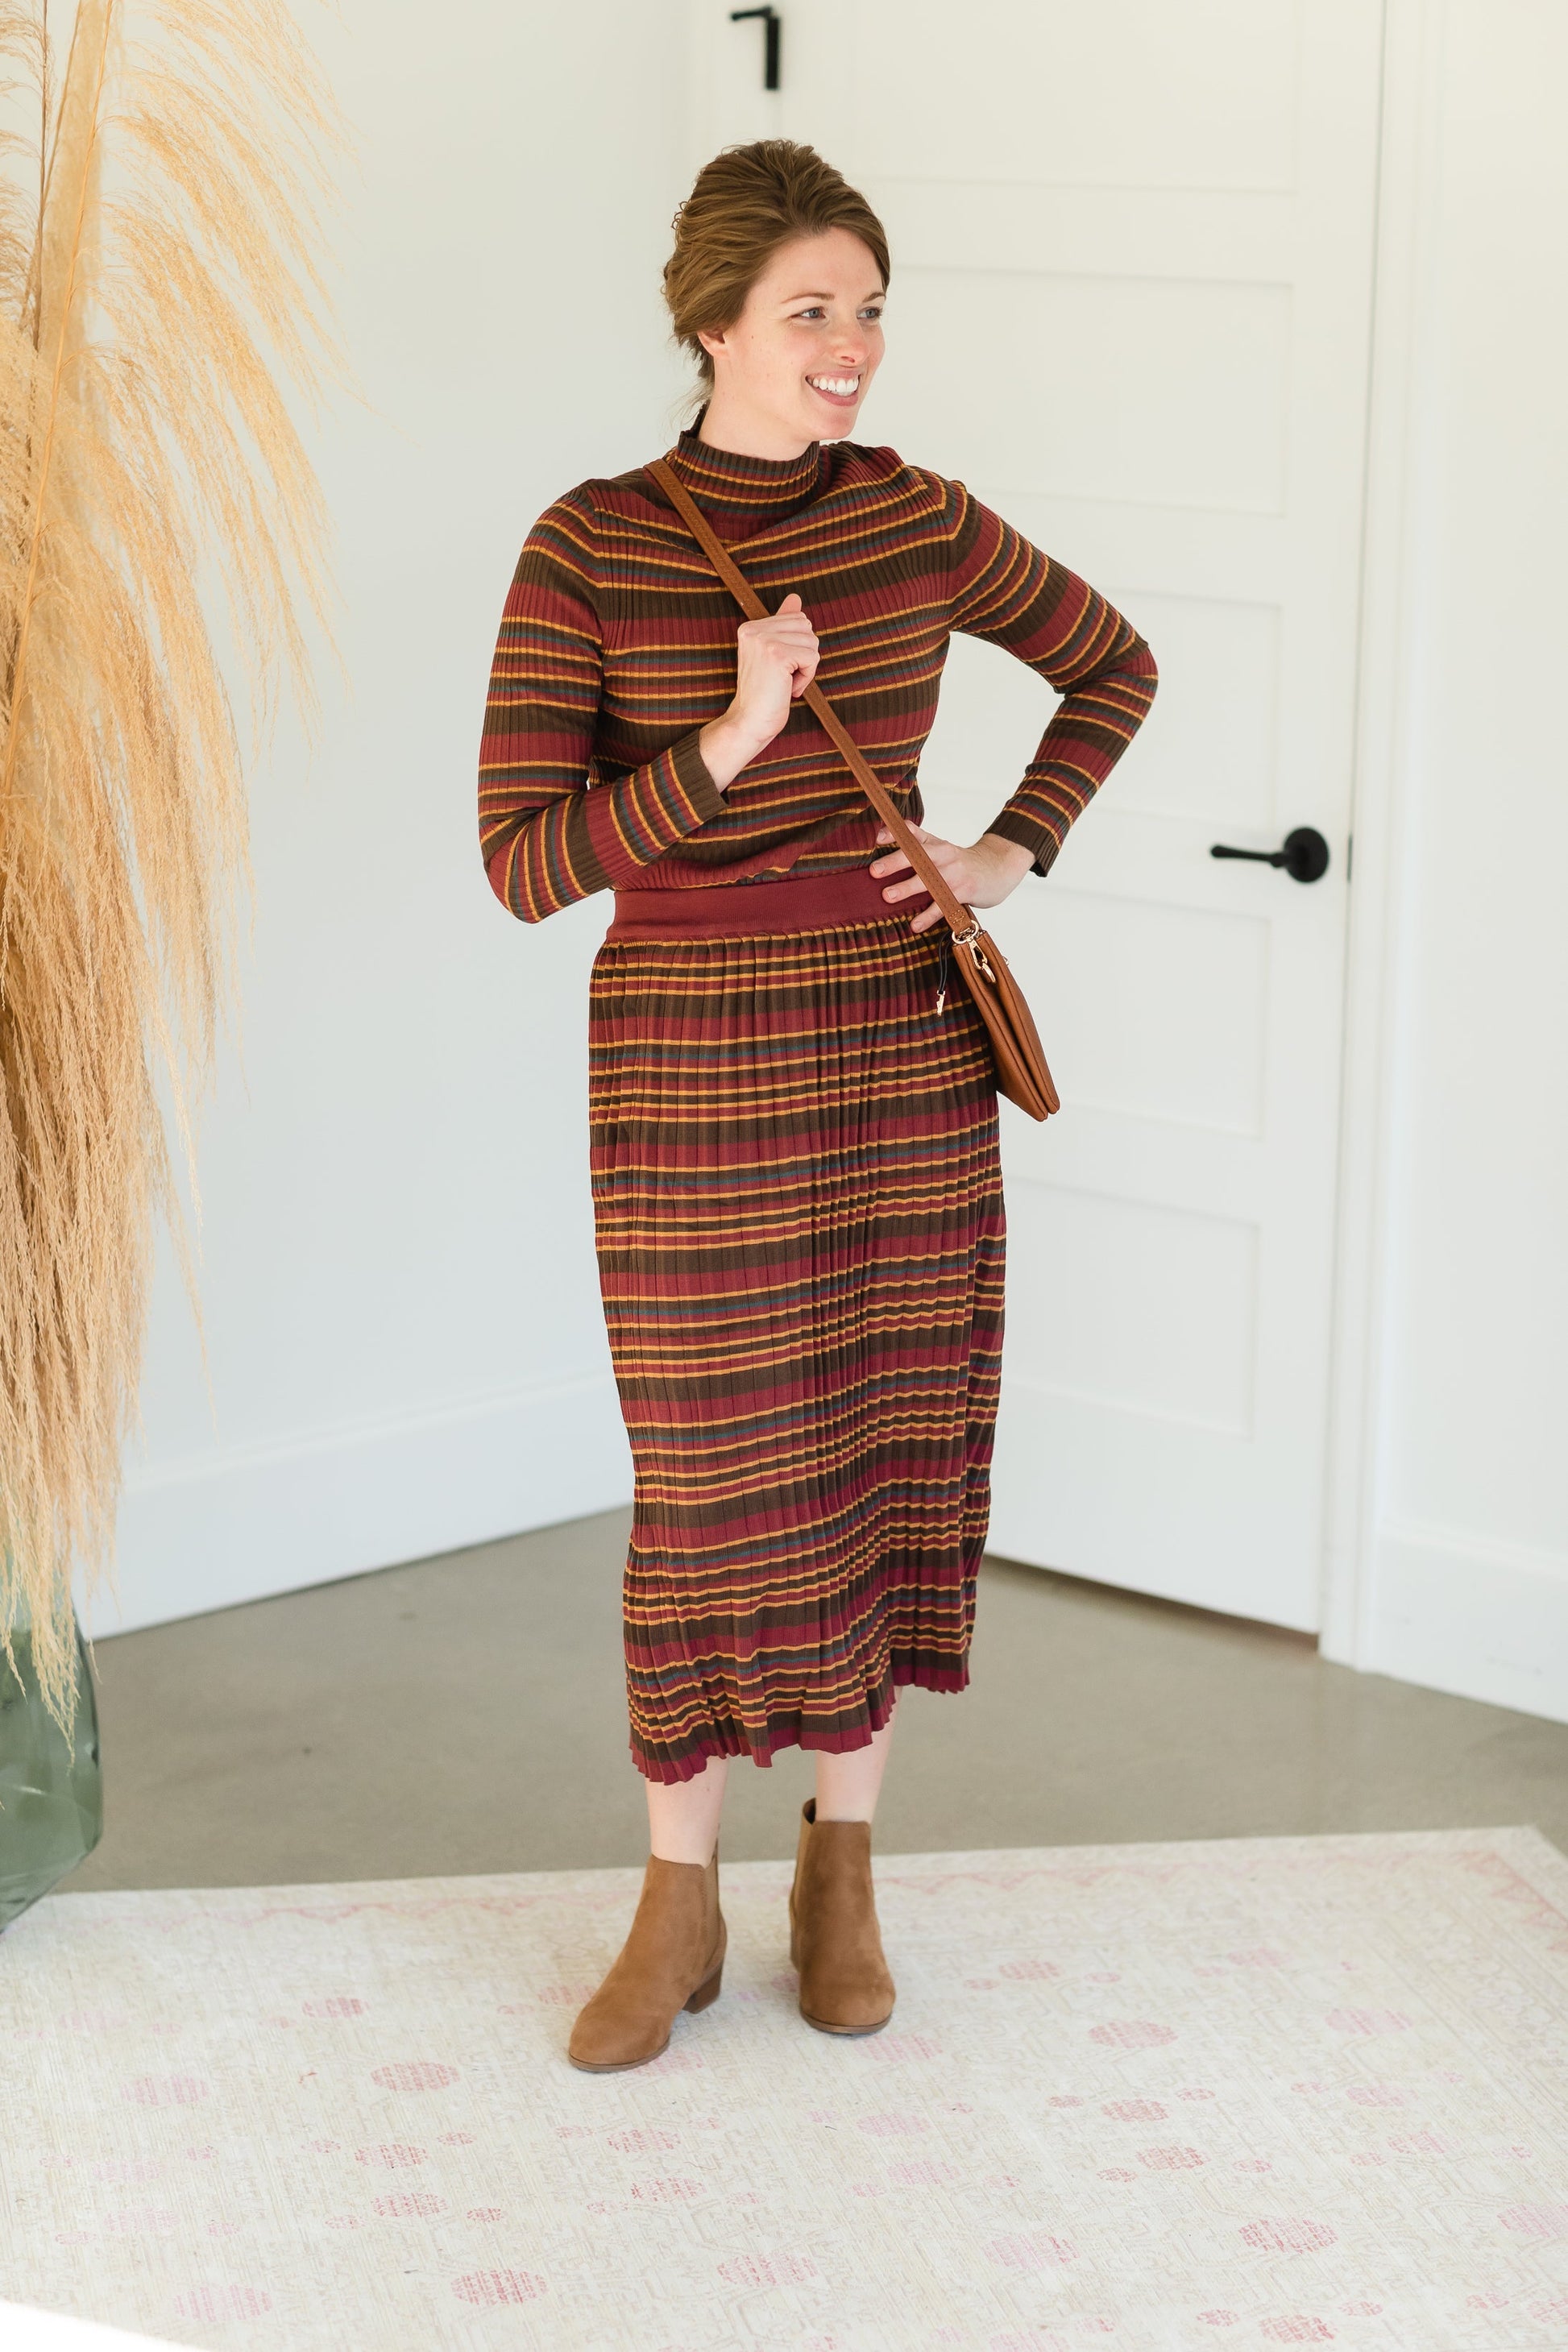 Brown Multi Stripe Ribbed Sweater Skirt - FINAL SALE Tops